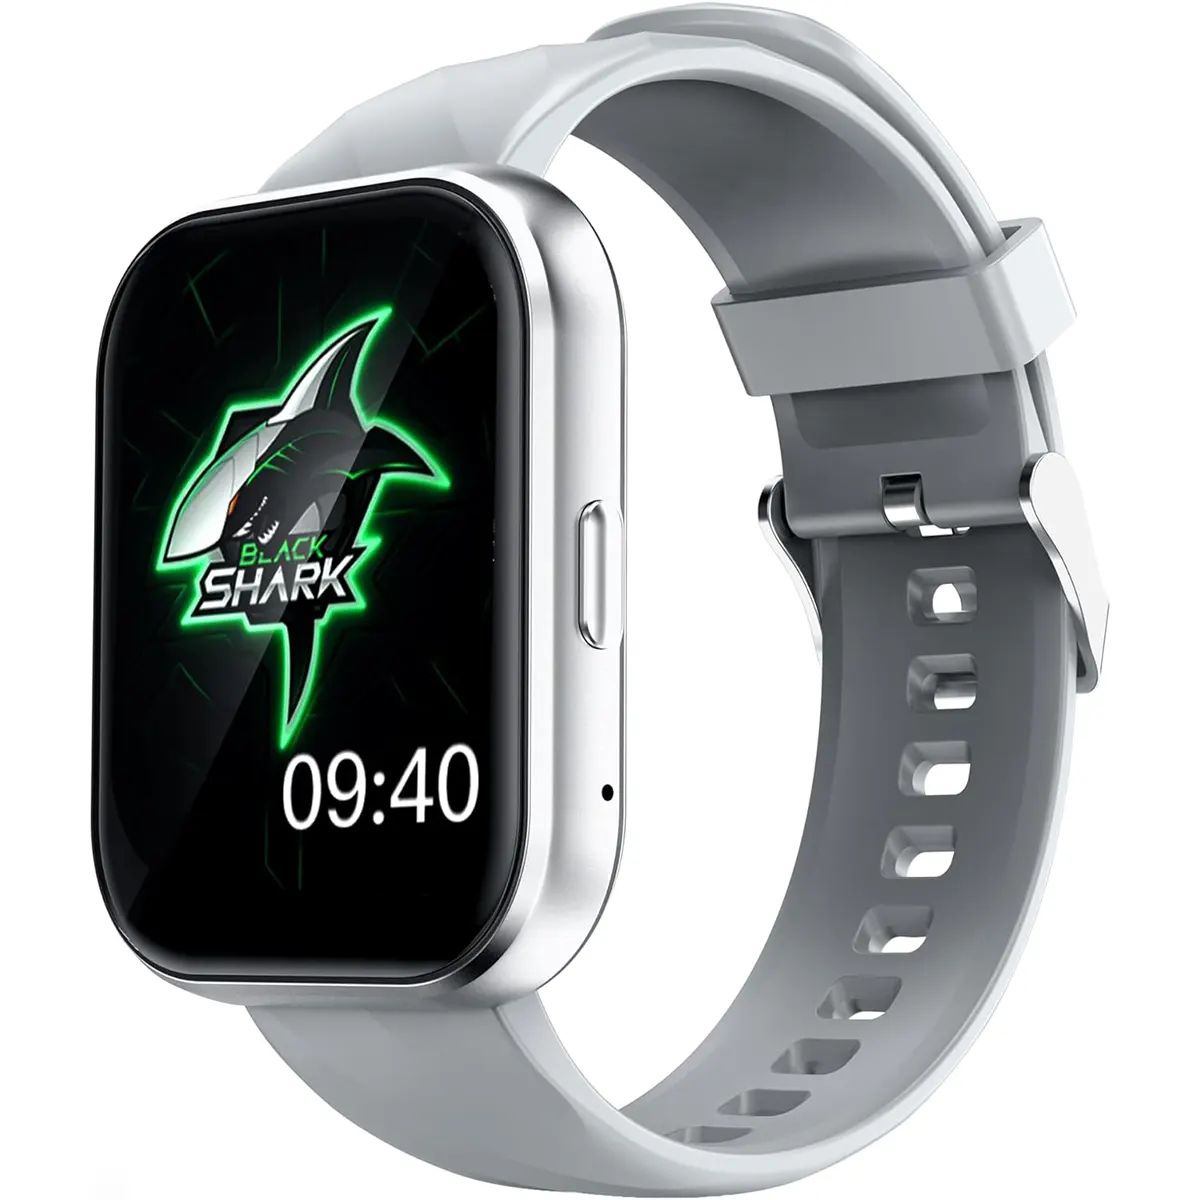 ساعت هوشمند بلک شارک Black Shark GT Neo Smart Watch رنگ نقره ای (7)